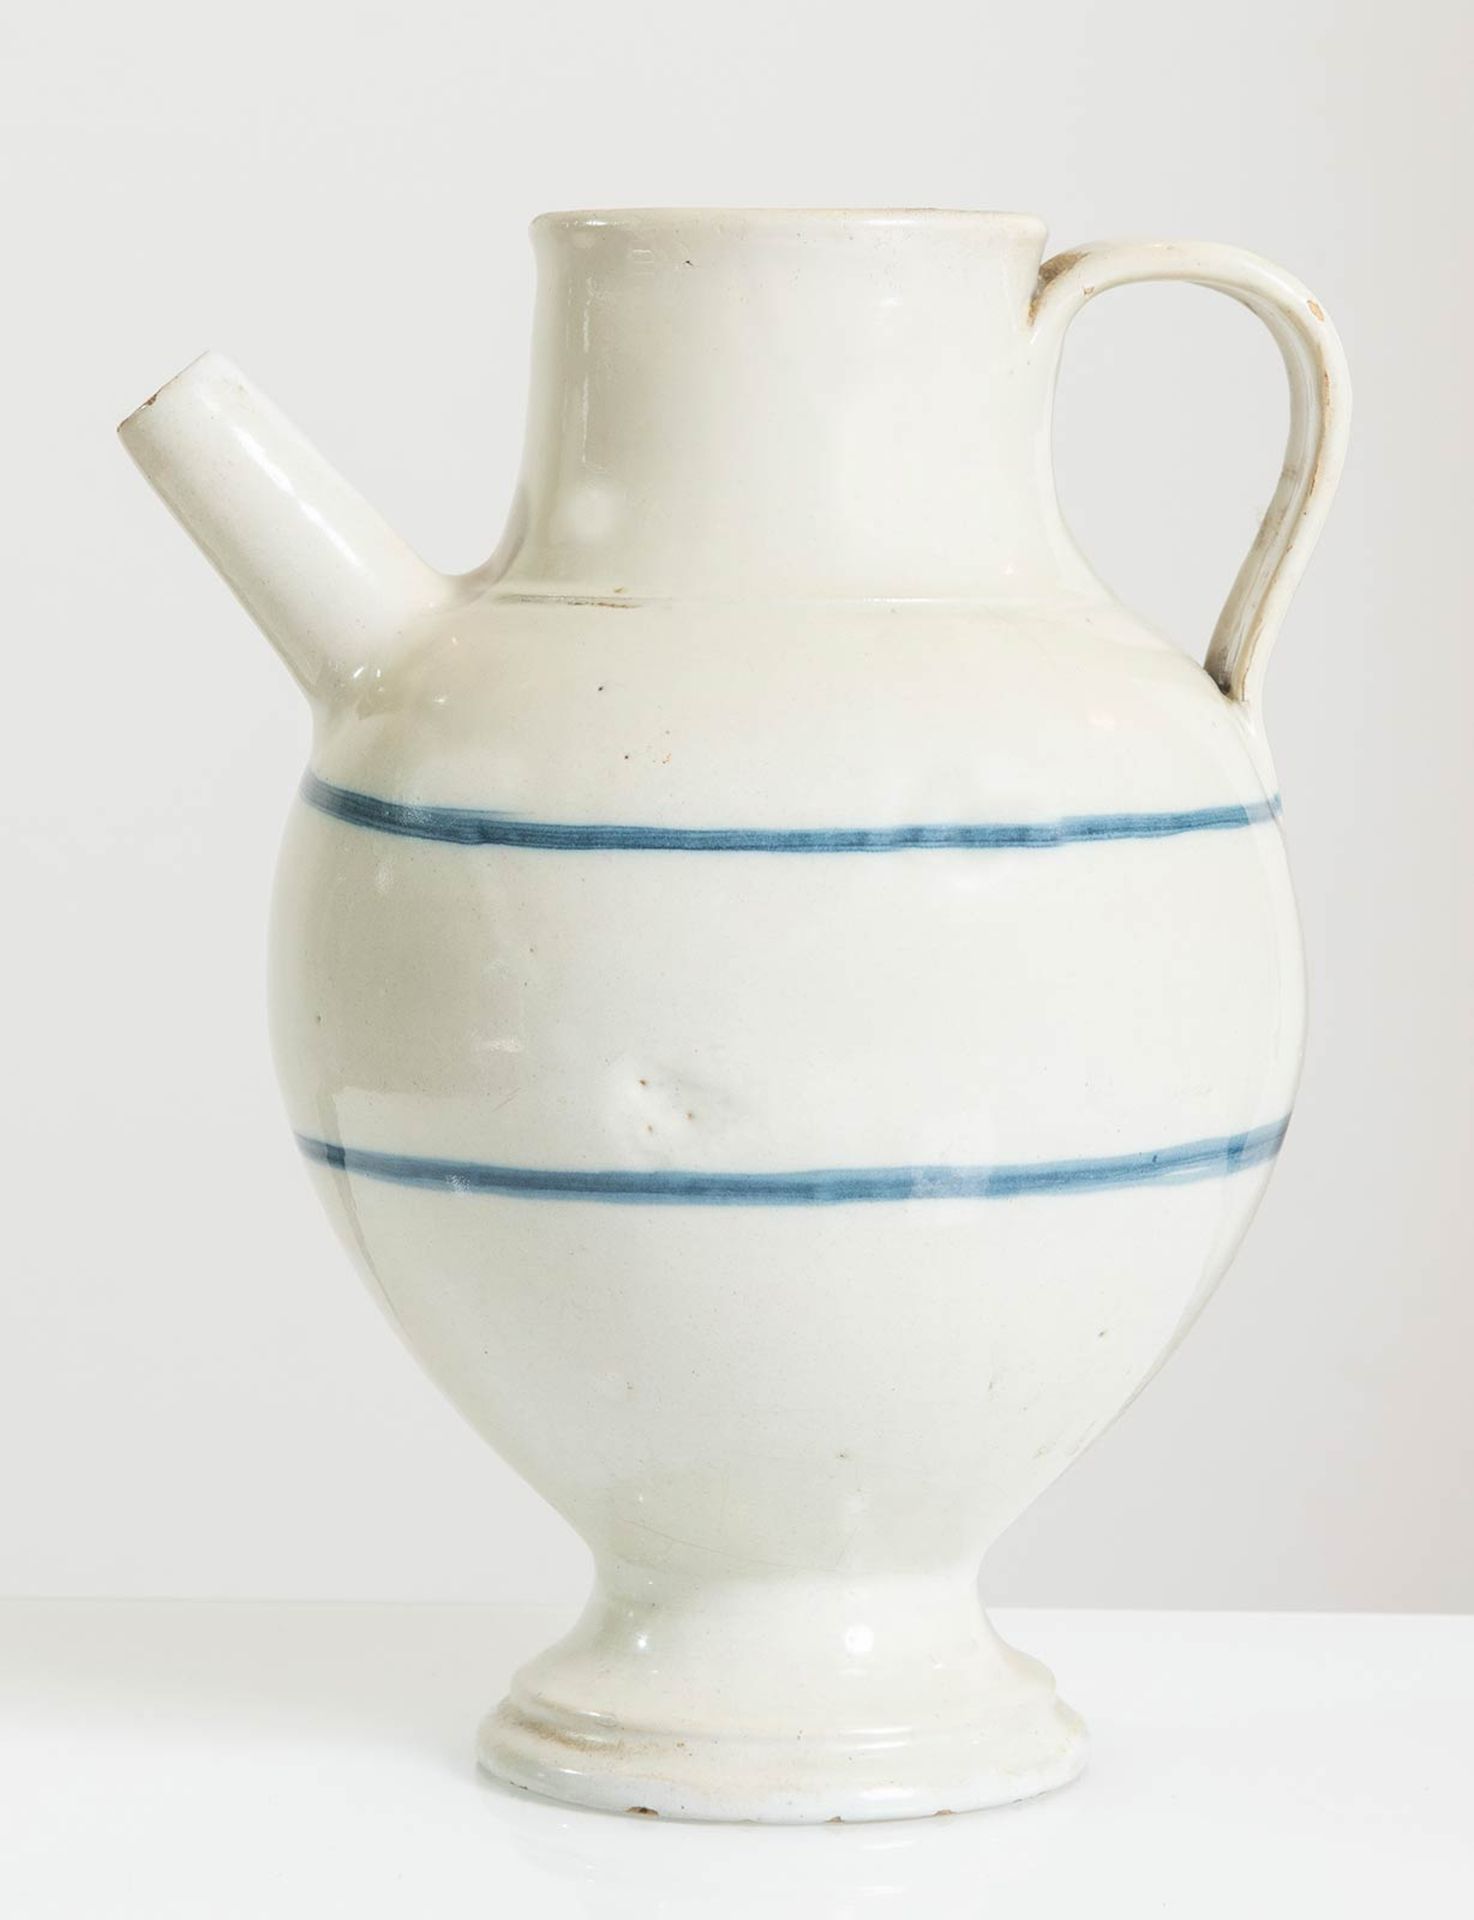 Versatoio da farmacia in ceramica bianca con decori in blu, XIX sec. - Image 2 of 3